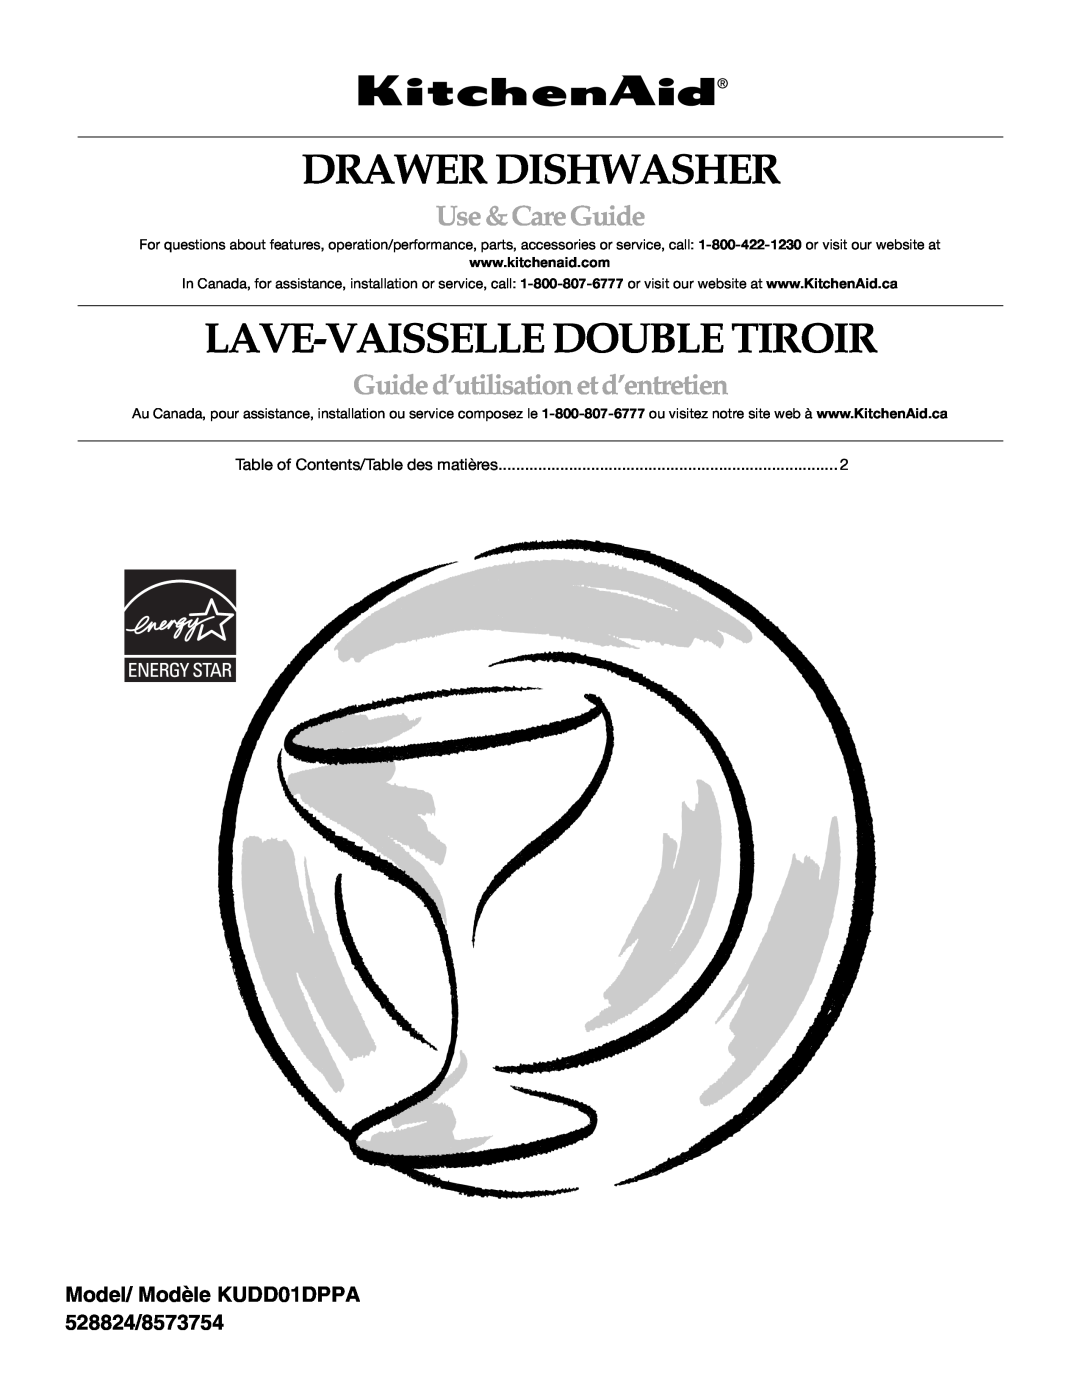 KitchenAid manual Model/ Modèle KUDD01DPPA 528824/8573754, Drawer Dishwasher, Lave-Vaisselle Double Tiroir 